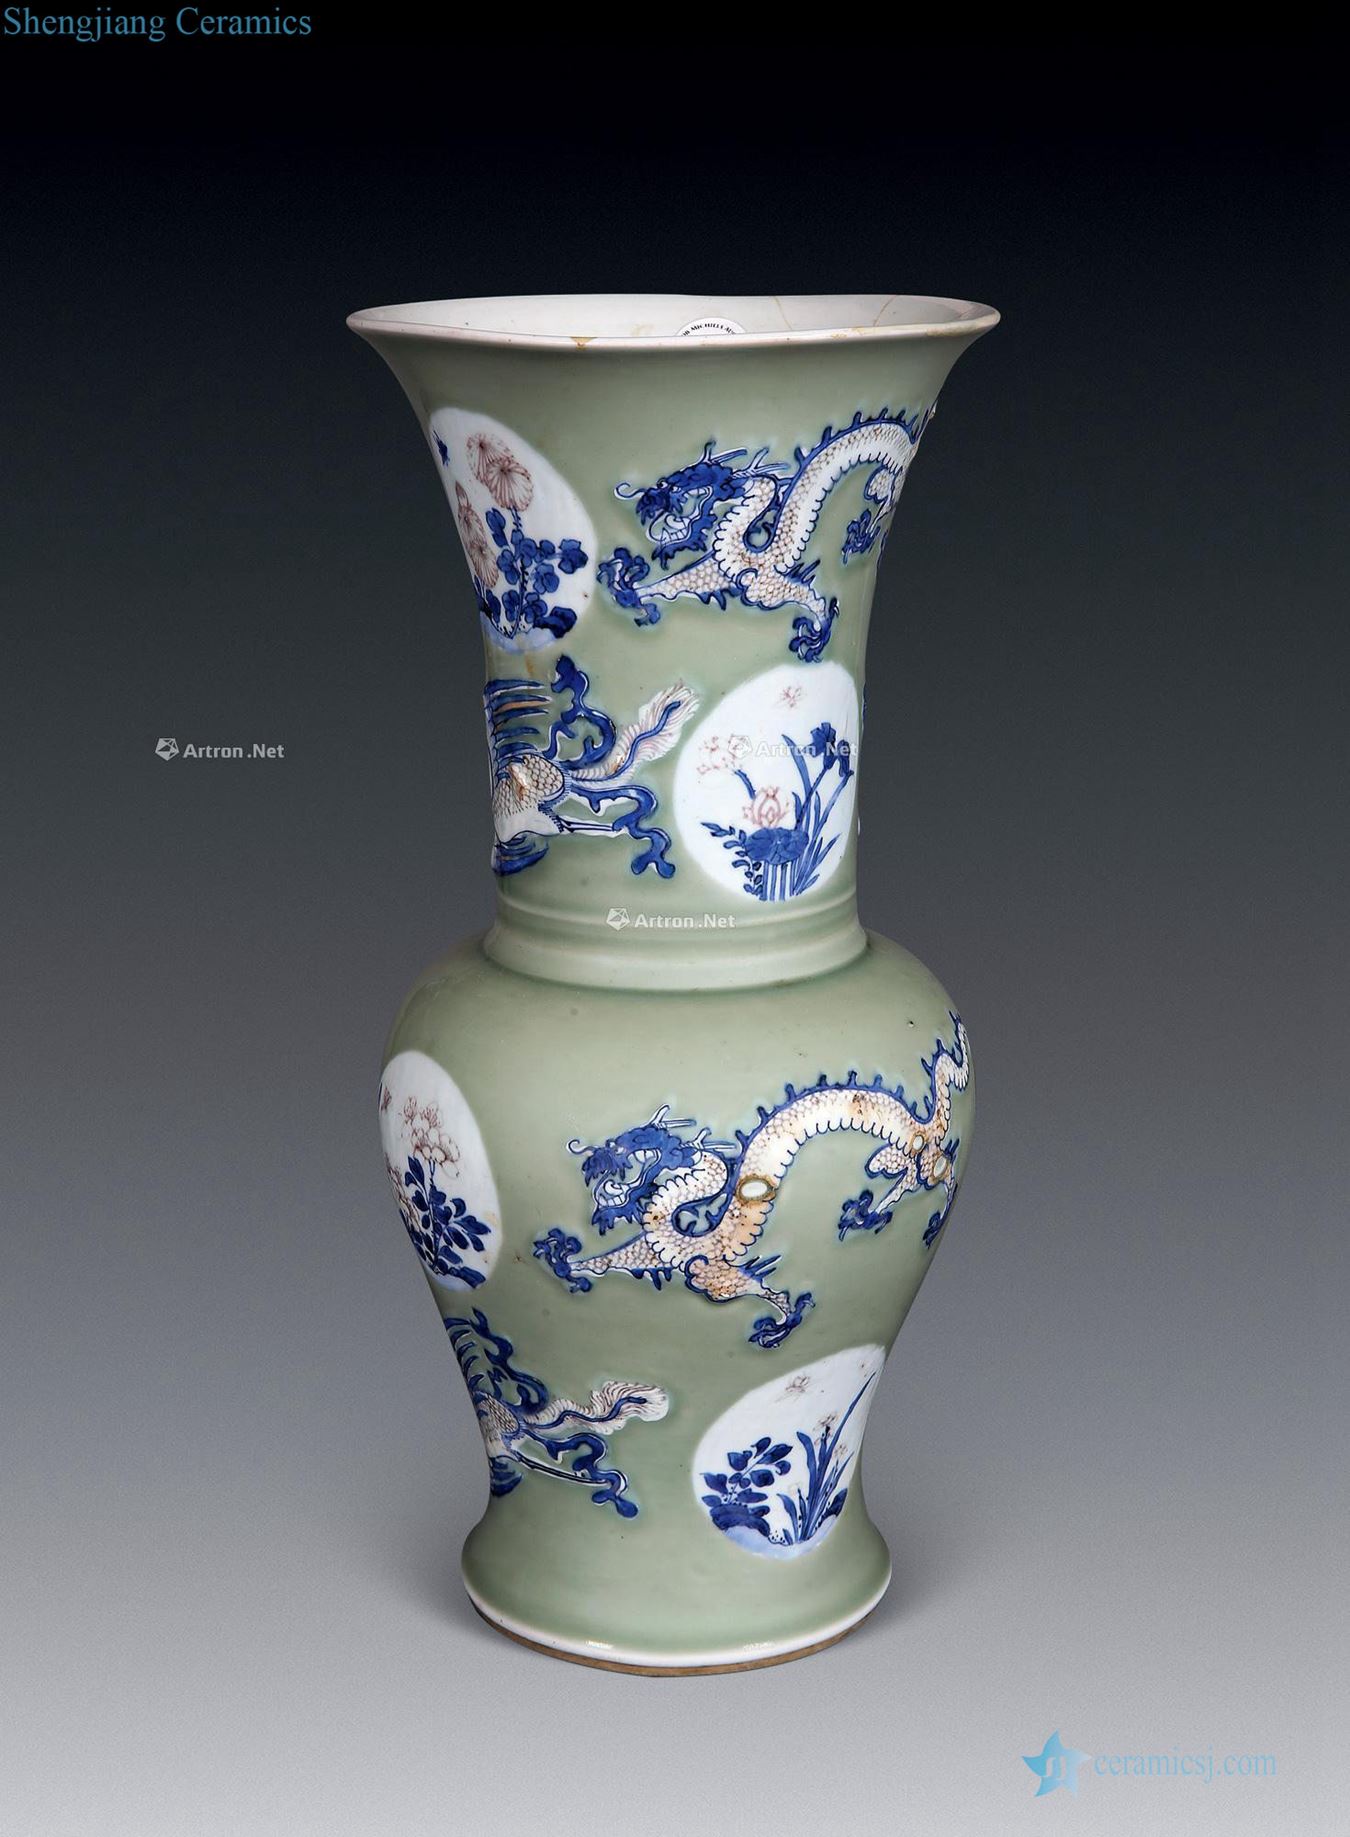 Qianlong pea green glaze porcelain vase with flowers